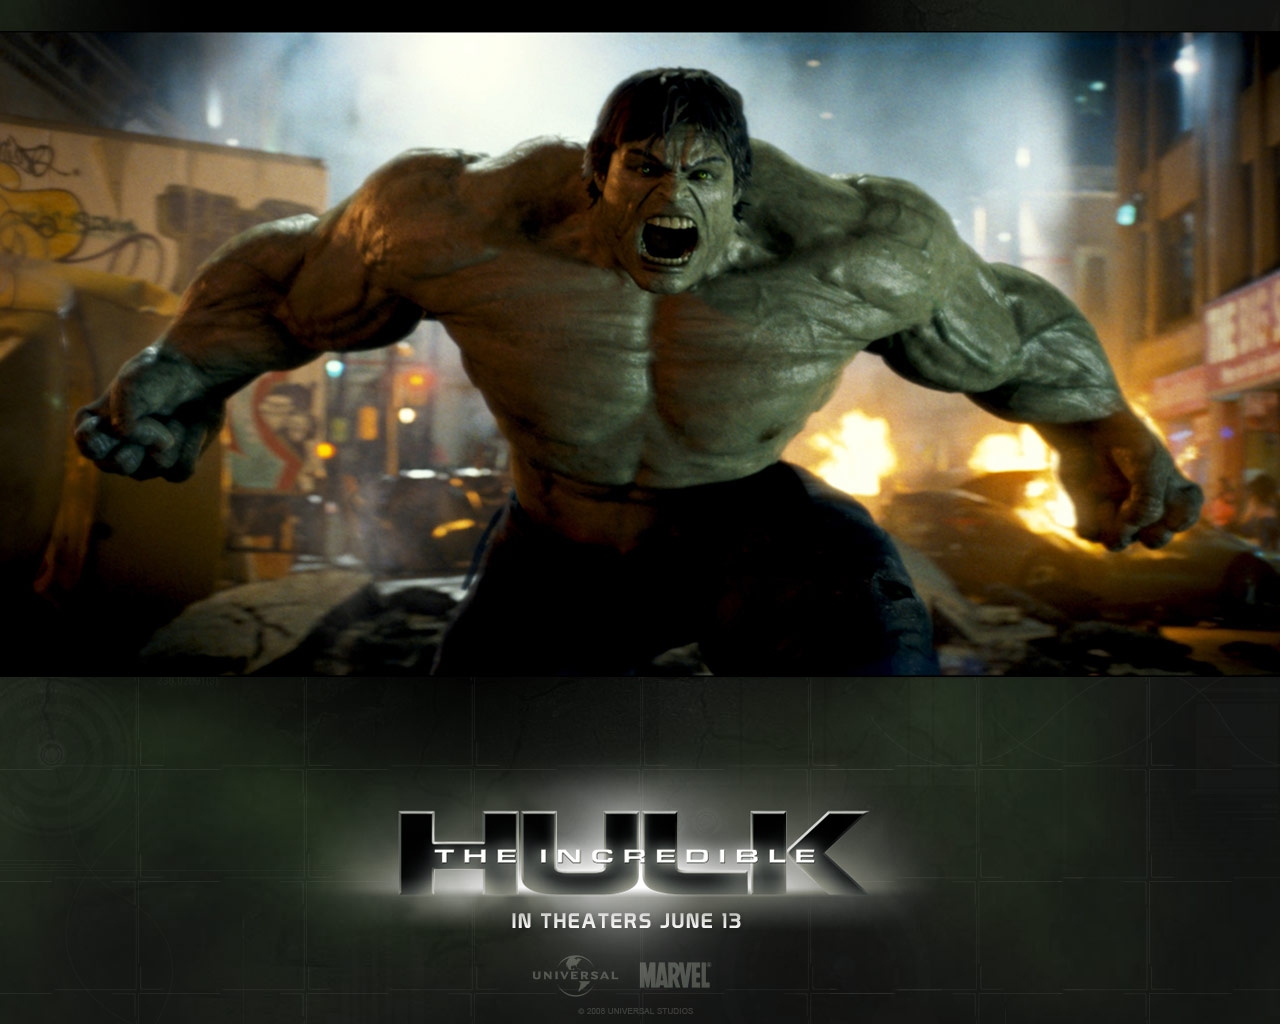 "The Incredible Hulk" desktop wallpaper (1280 x 1024 pixels)